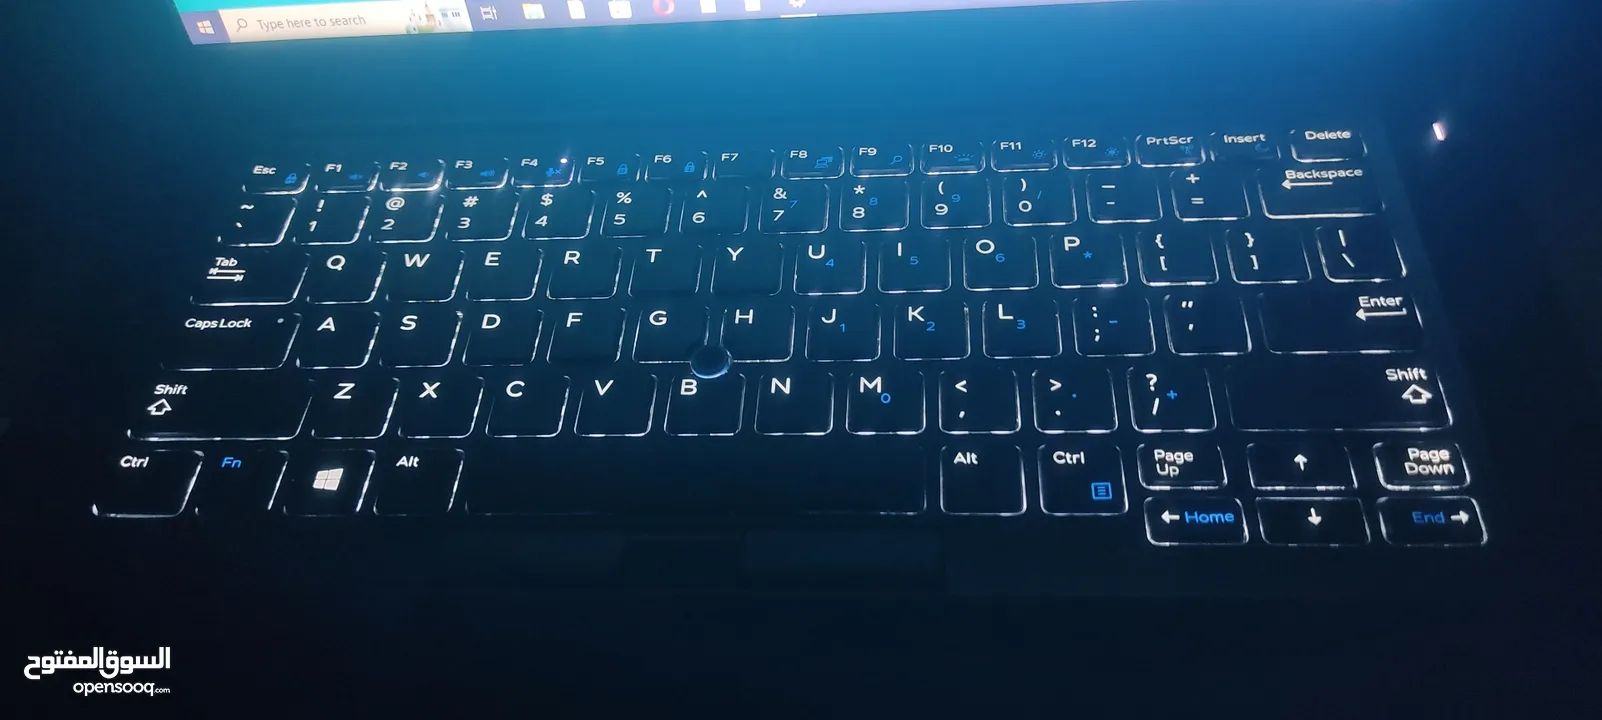 laptop Dell core i7